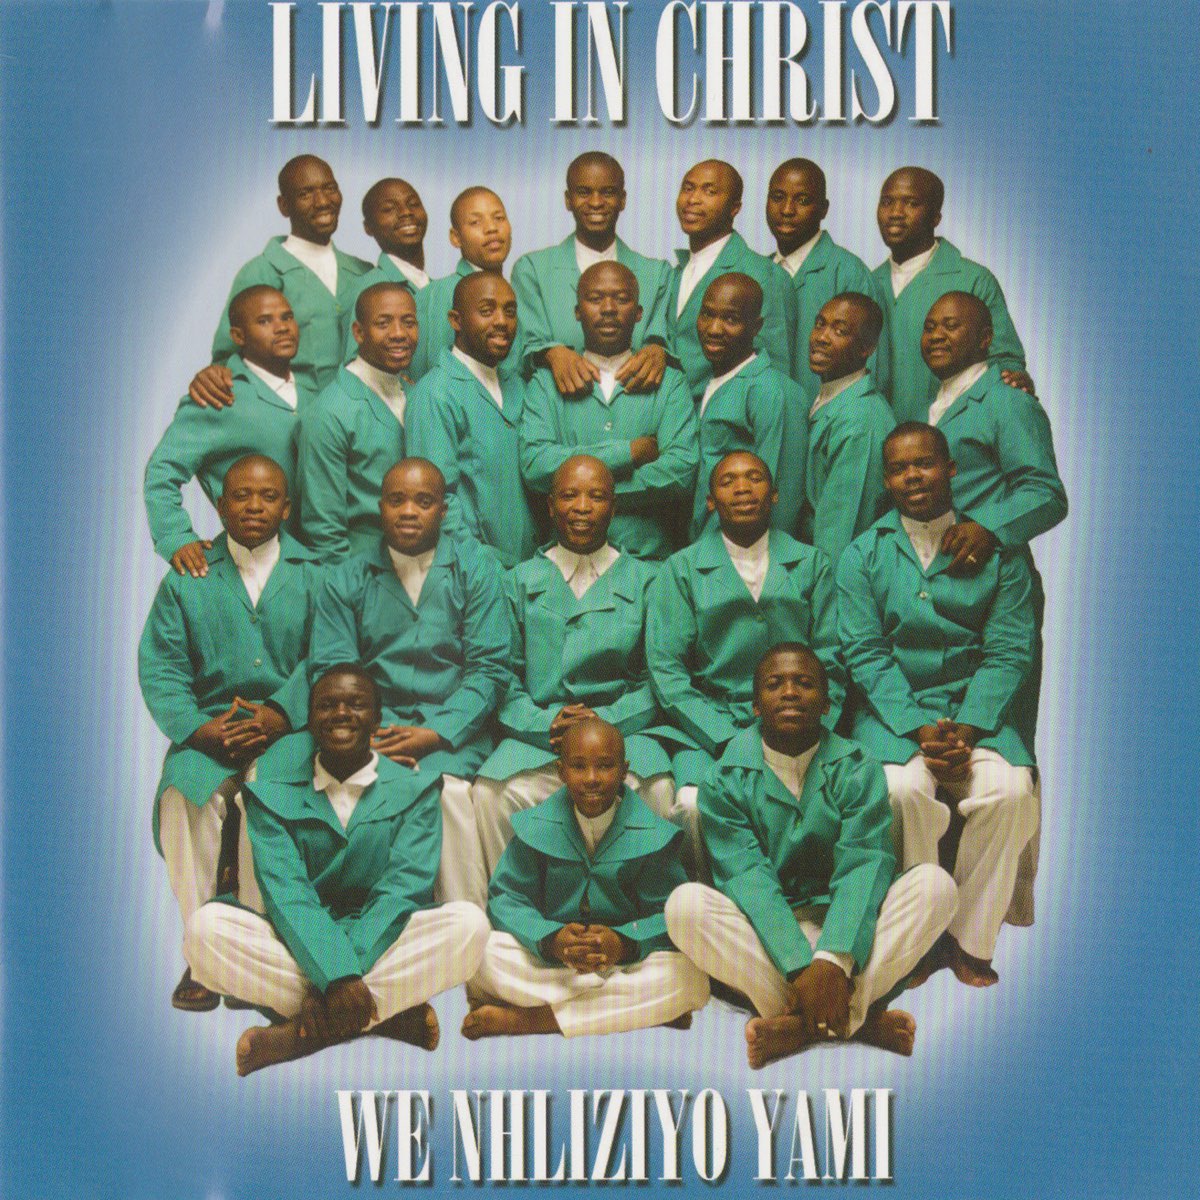 ‎We Nhliziyo Yami by Living in Christ on Apple Music